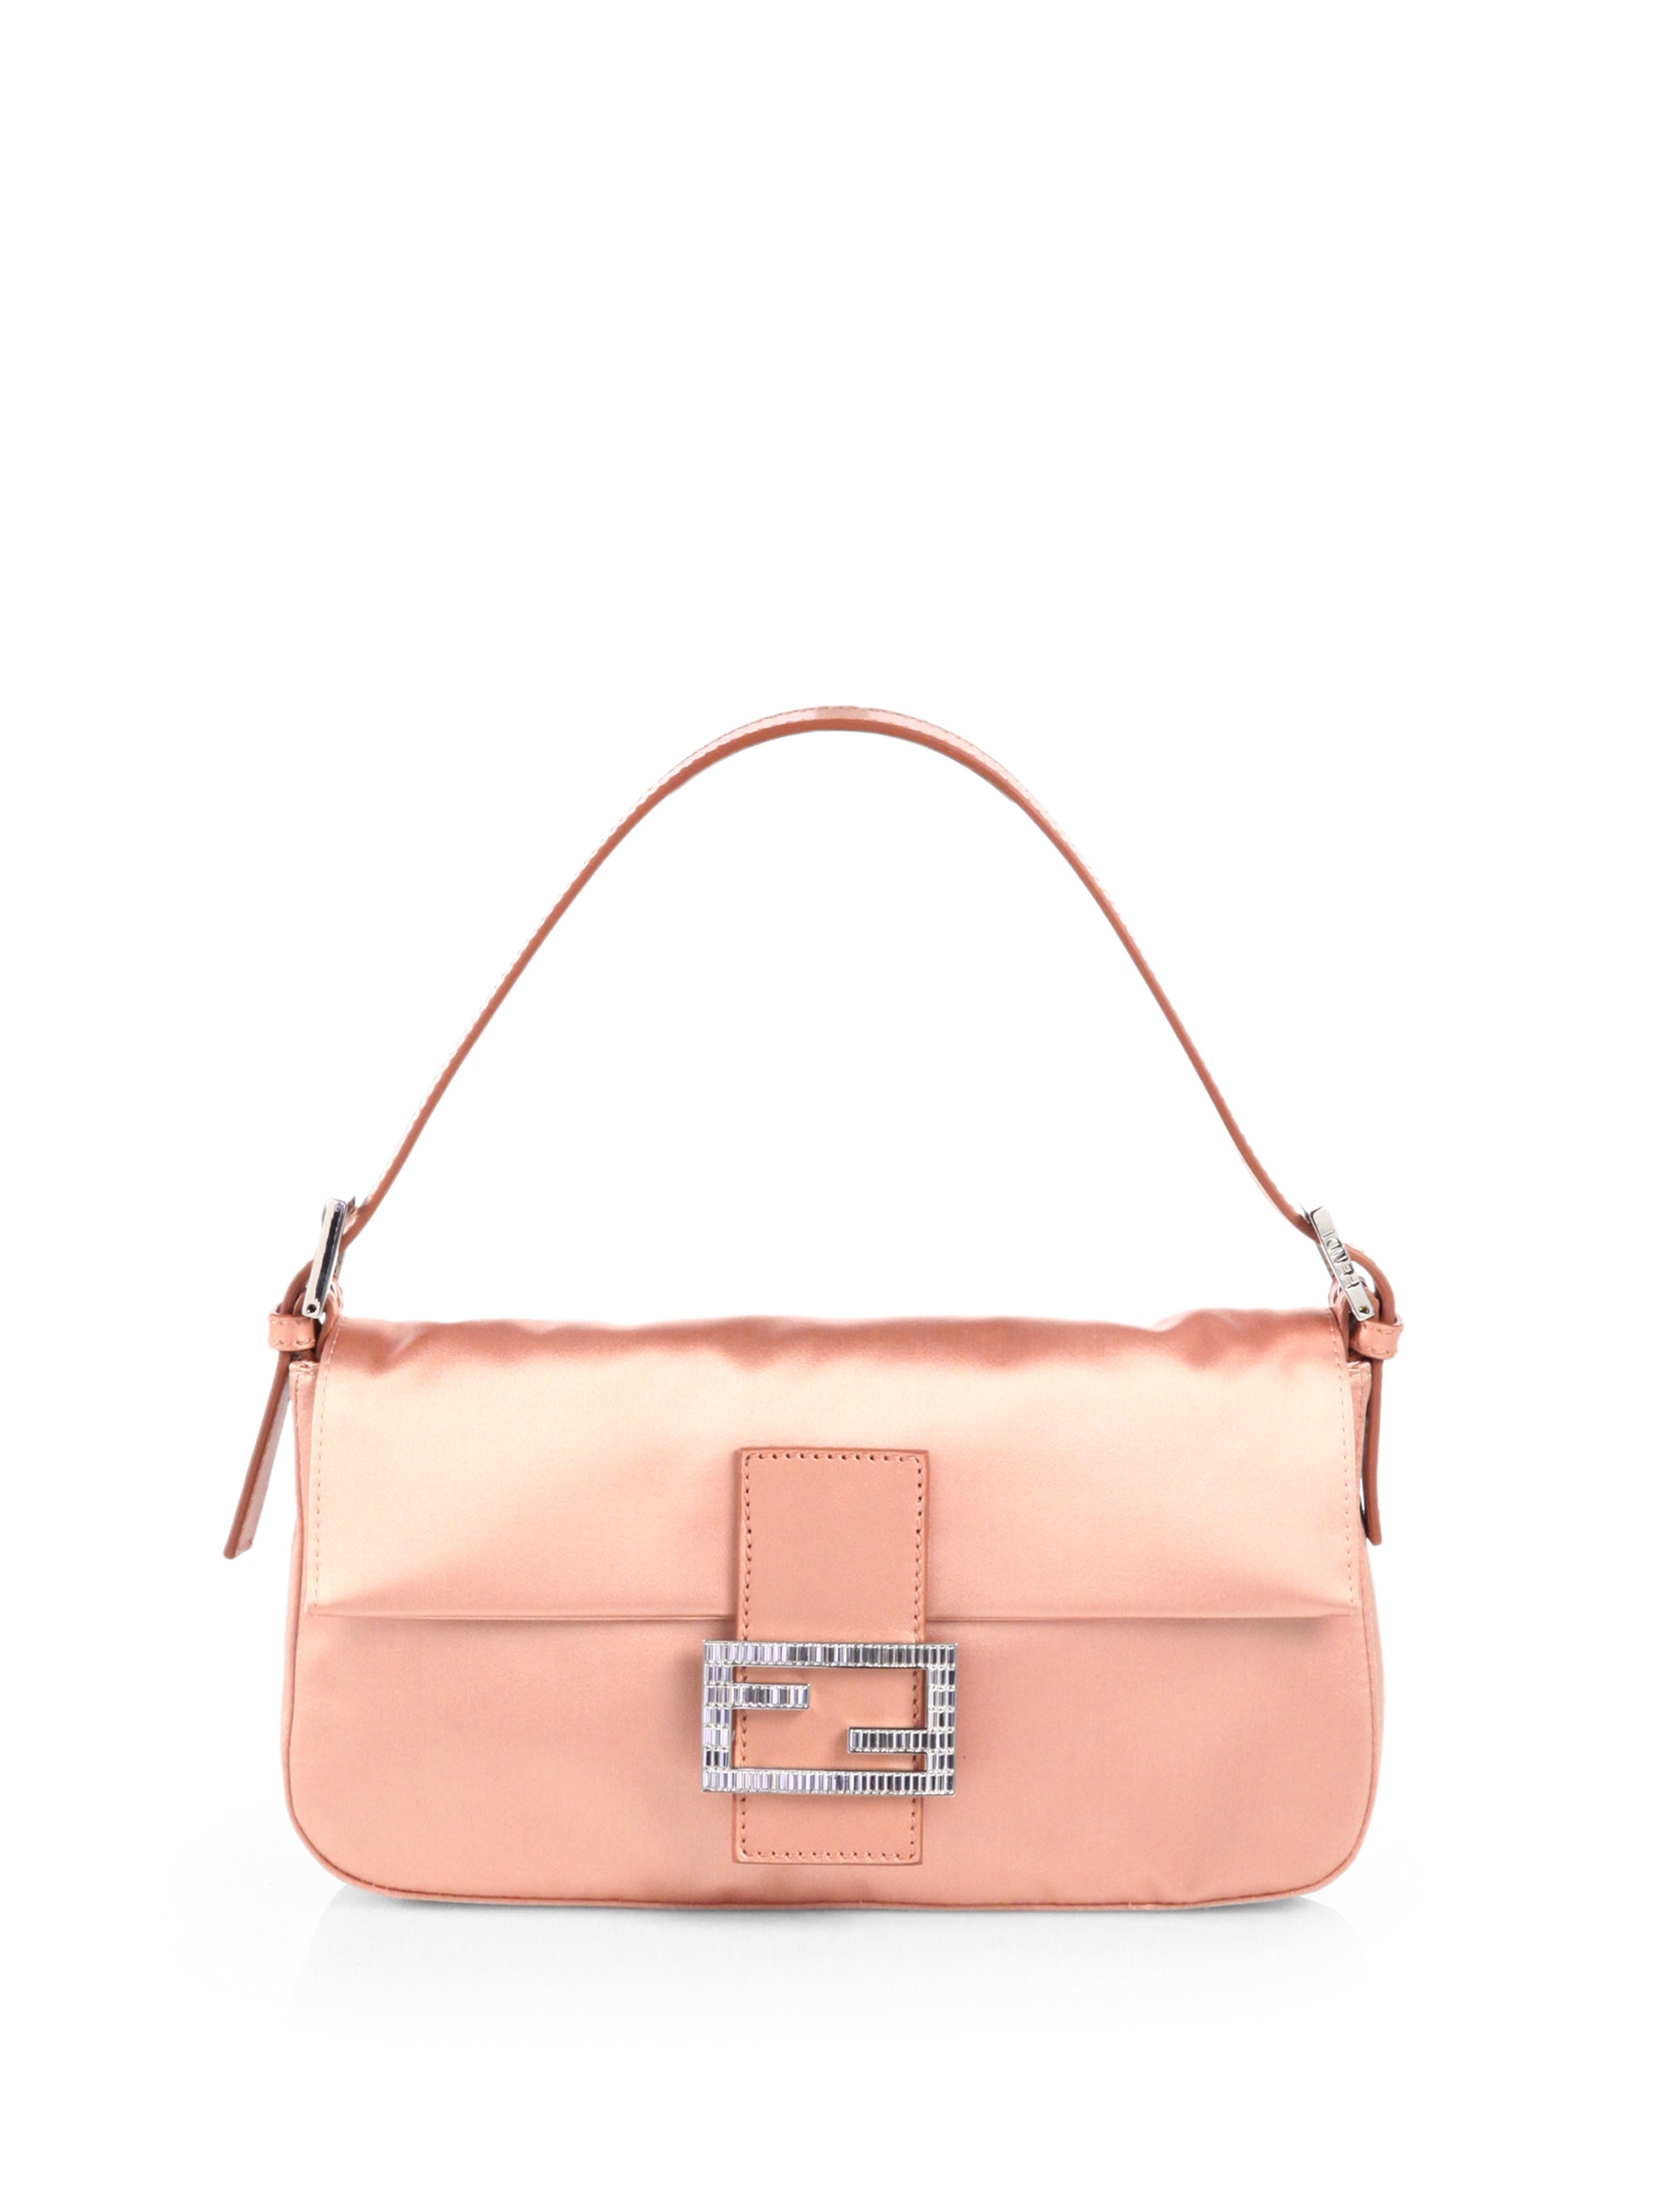 Fendi Raso Medium Satin Baguette Shoulder Bag in Pink | Lyst